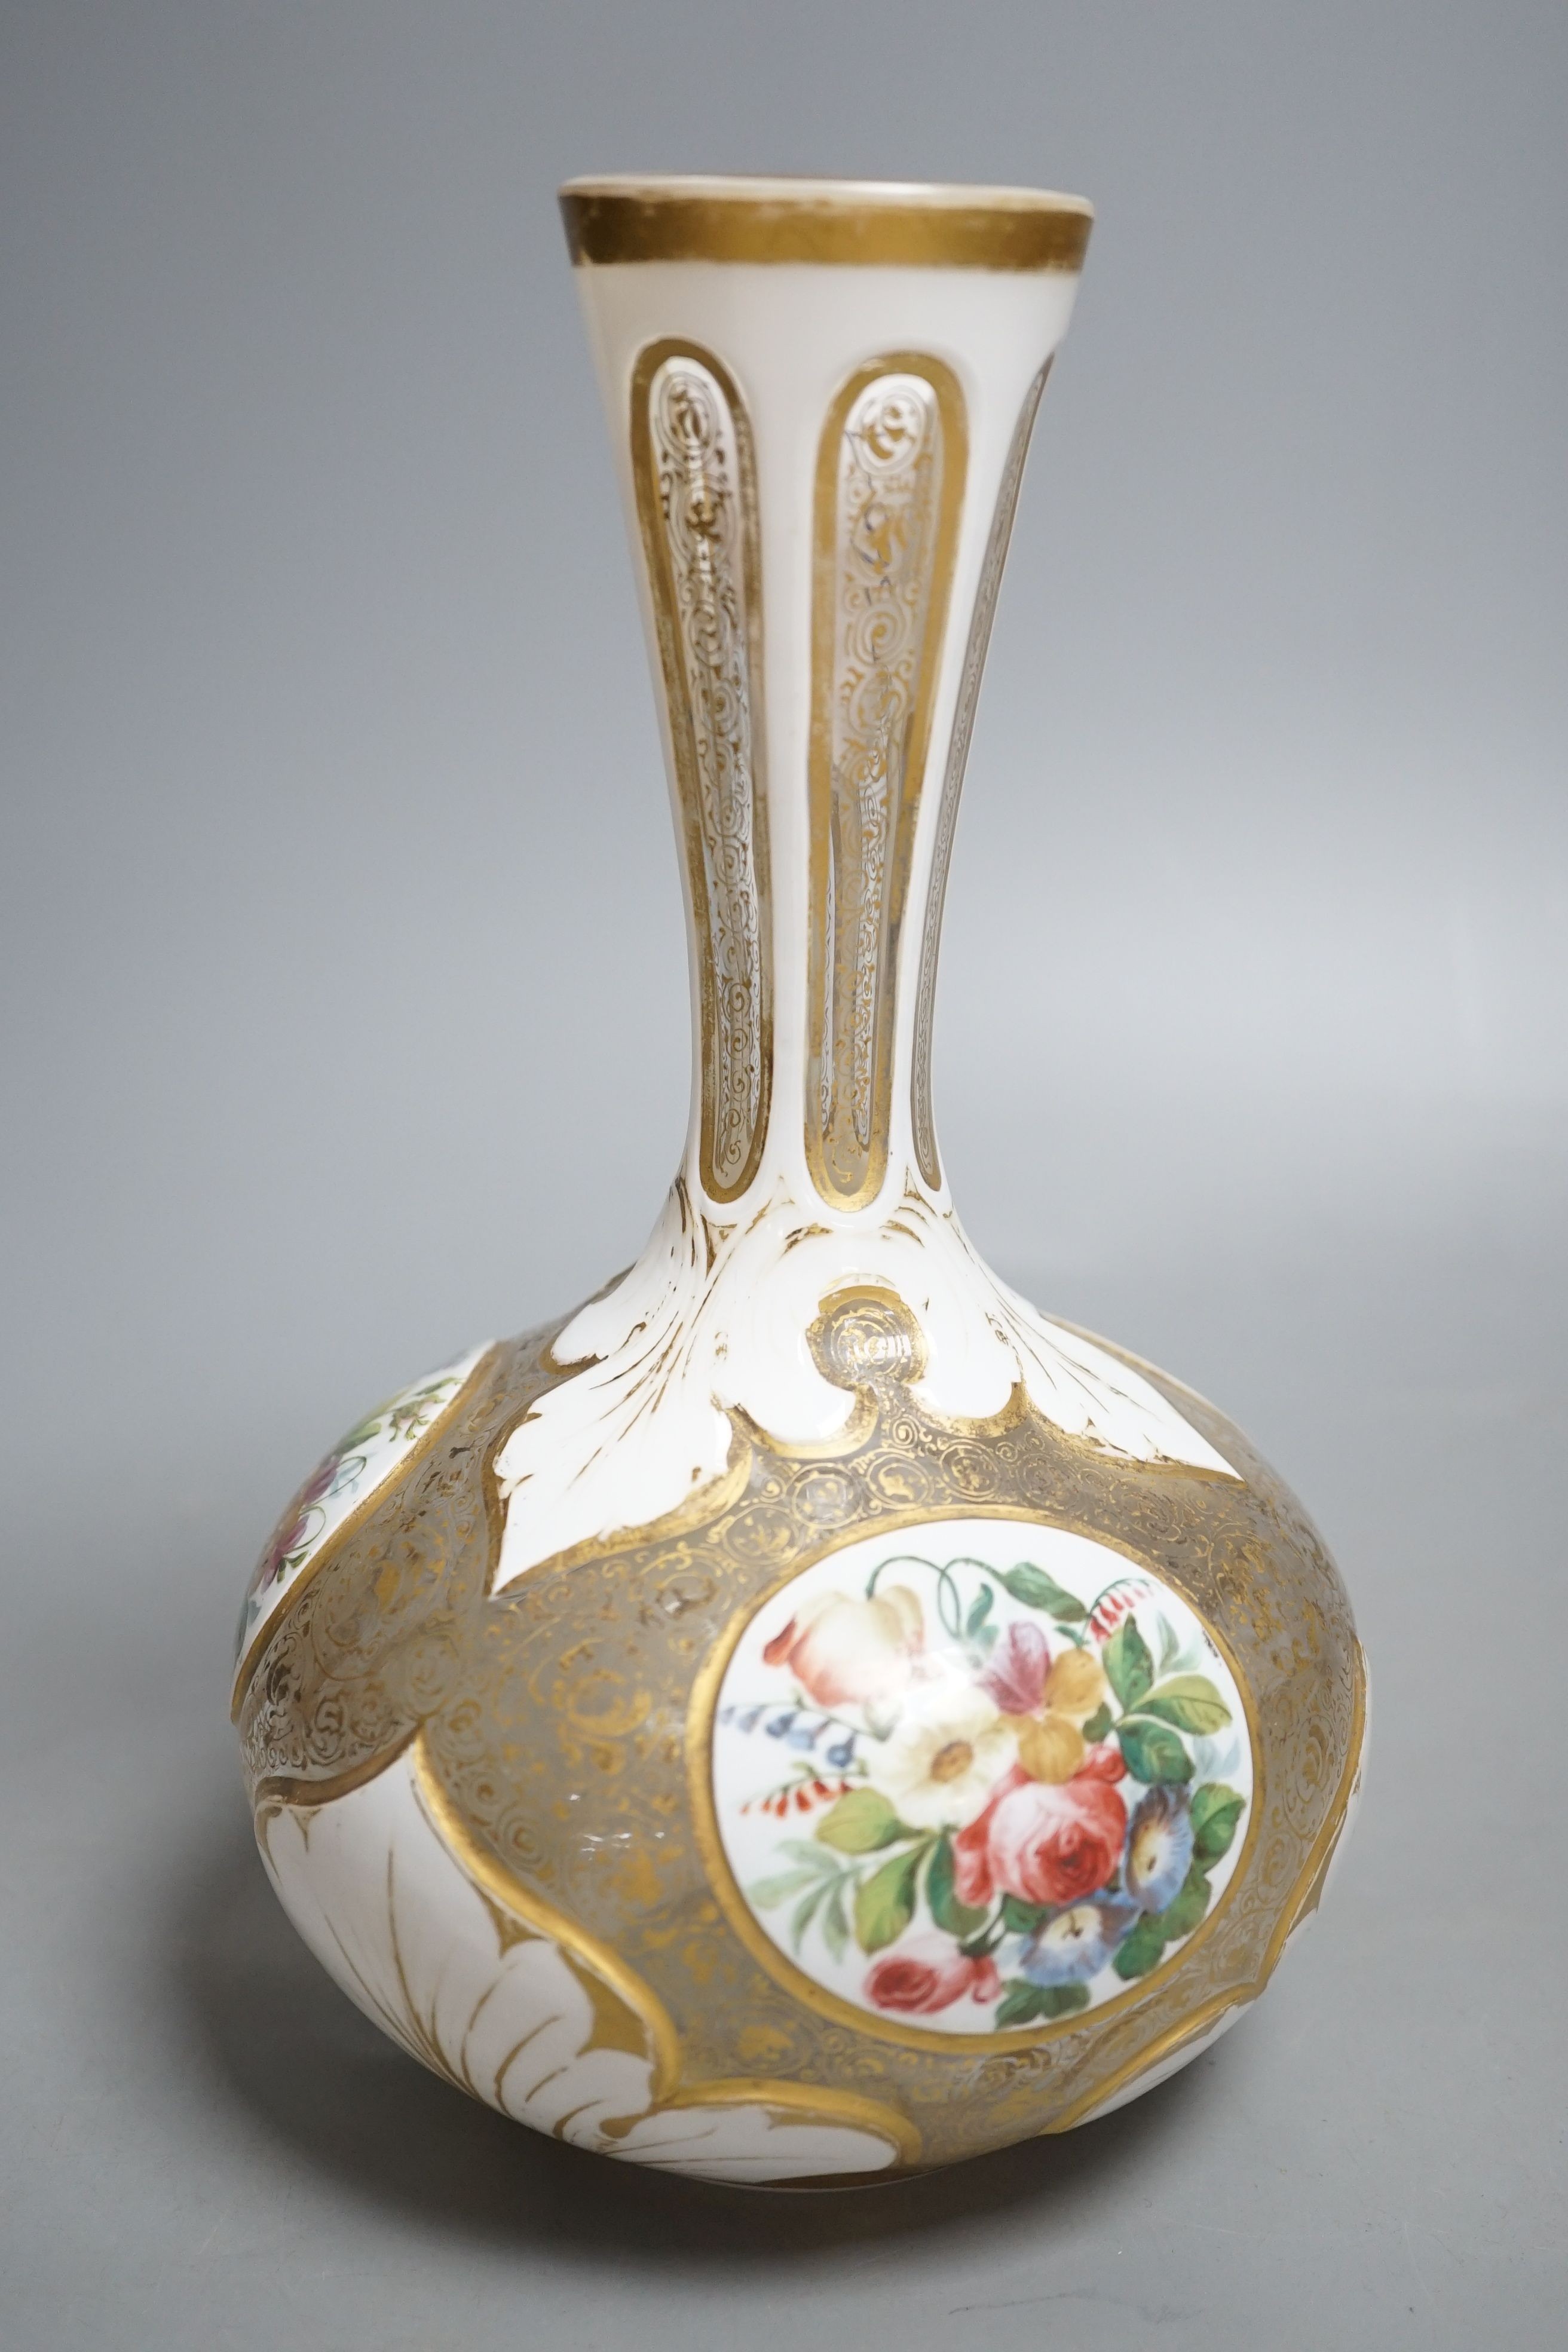 A 19th century Bohemian overlaid glass bottle vase, enamel painted panels - 22cm tall